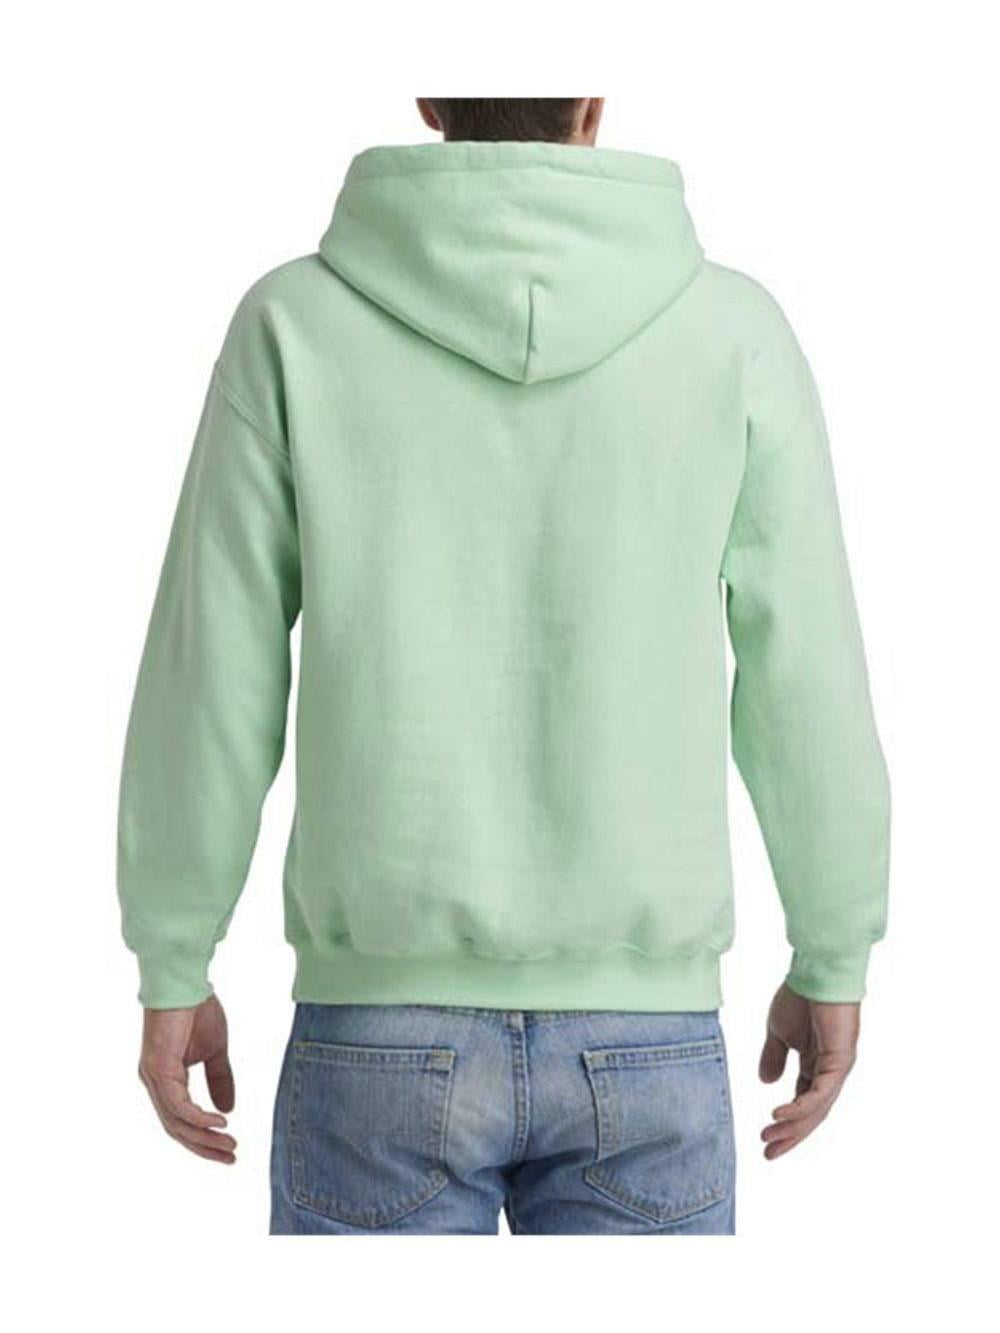 Heavy Blend Hooded Sweatshirt, 2XL, Mint Green - Walmart.com